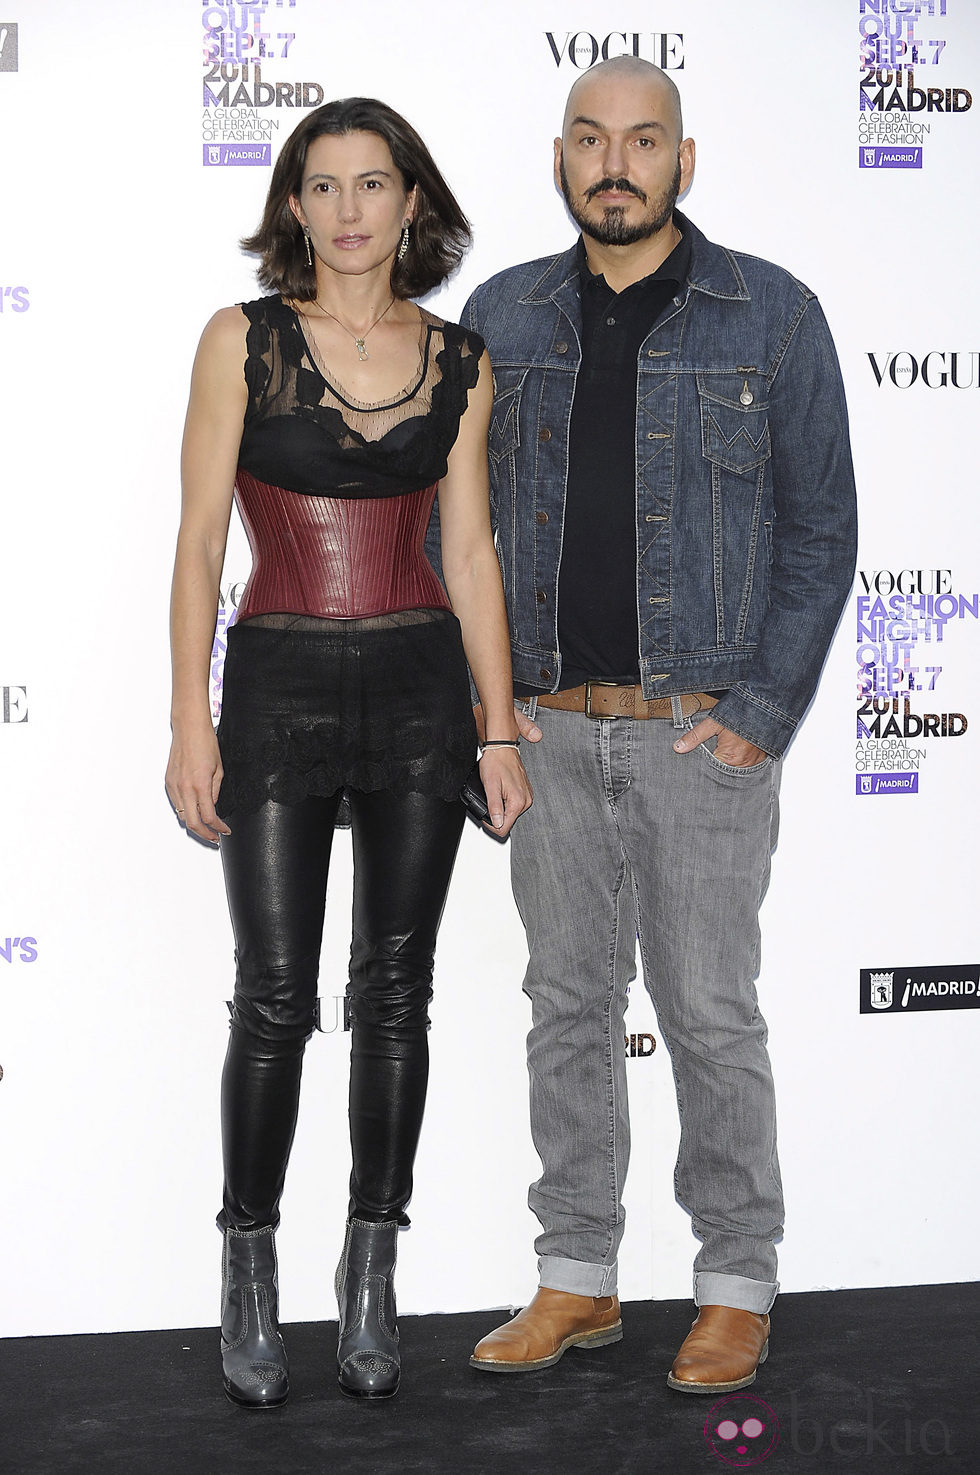 Juan Duyos en la Vogue Fashion's Night Out 2011